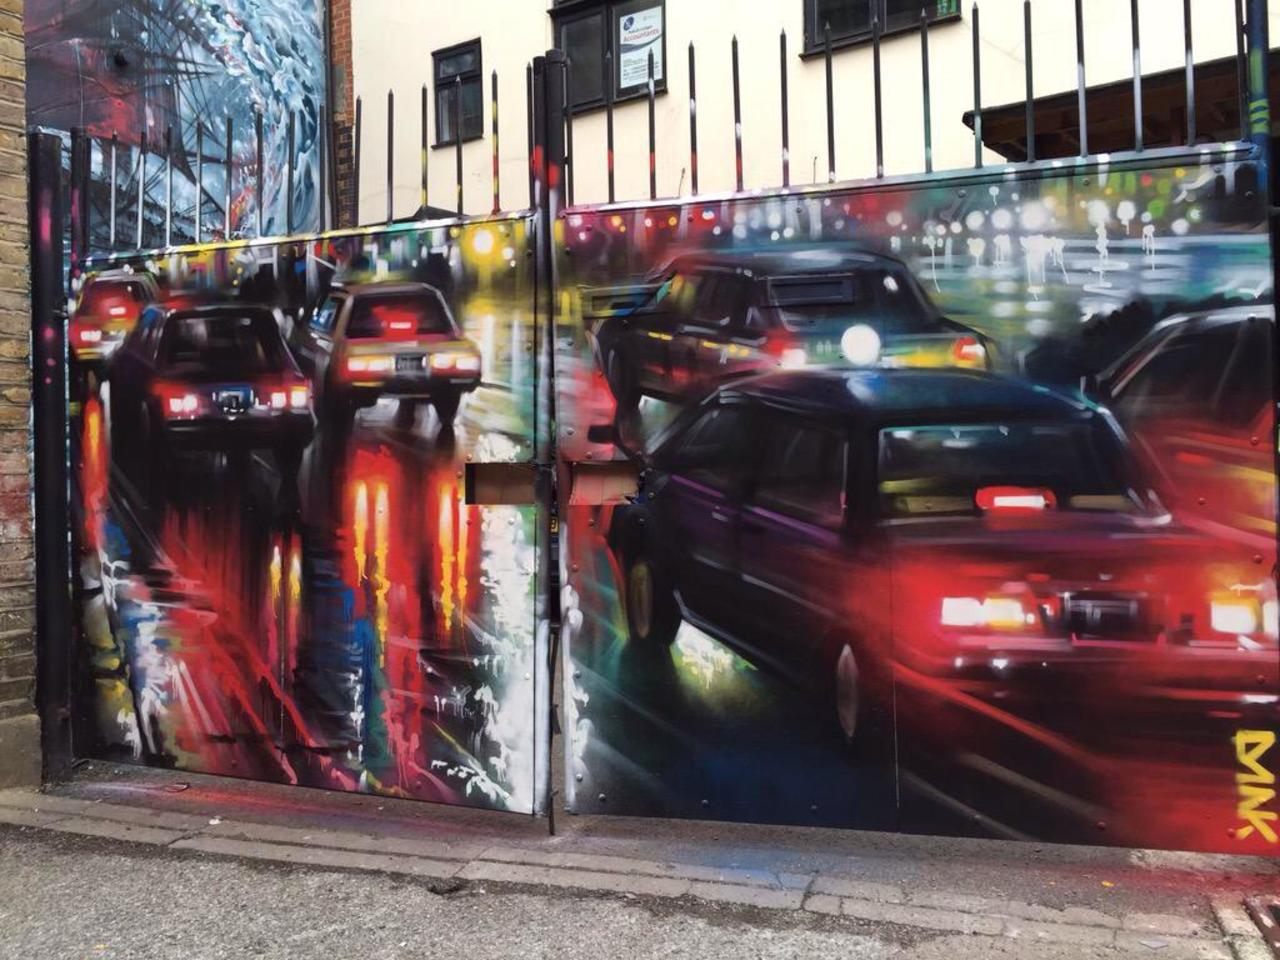 New Street Art by DanKitchener in Brick Lane London 

#art #graffiti #mural #streetart http://t.co/1ISZ697nMq